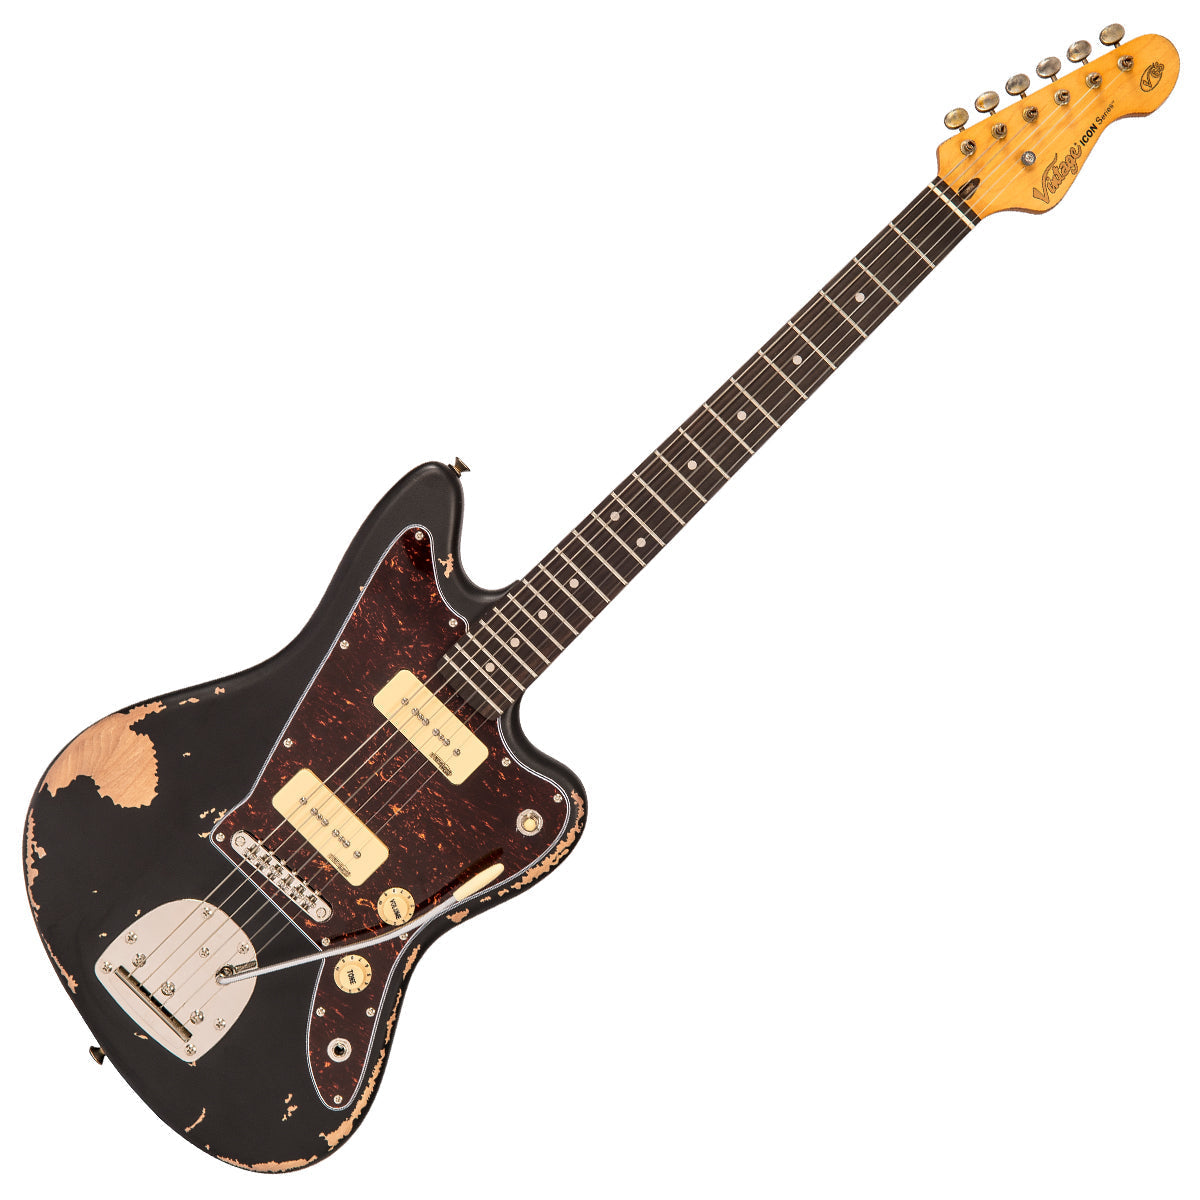 Vintage V65 ICON Vibrato Electric Guitar ~ Distressed Black, Electric Guitar for sale at Richards Guitars.